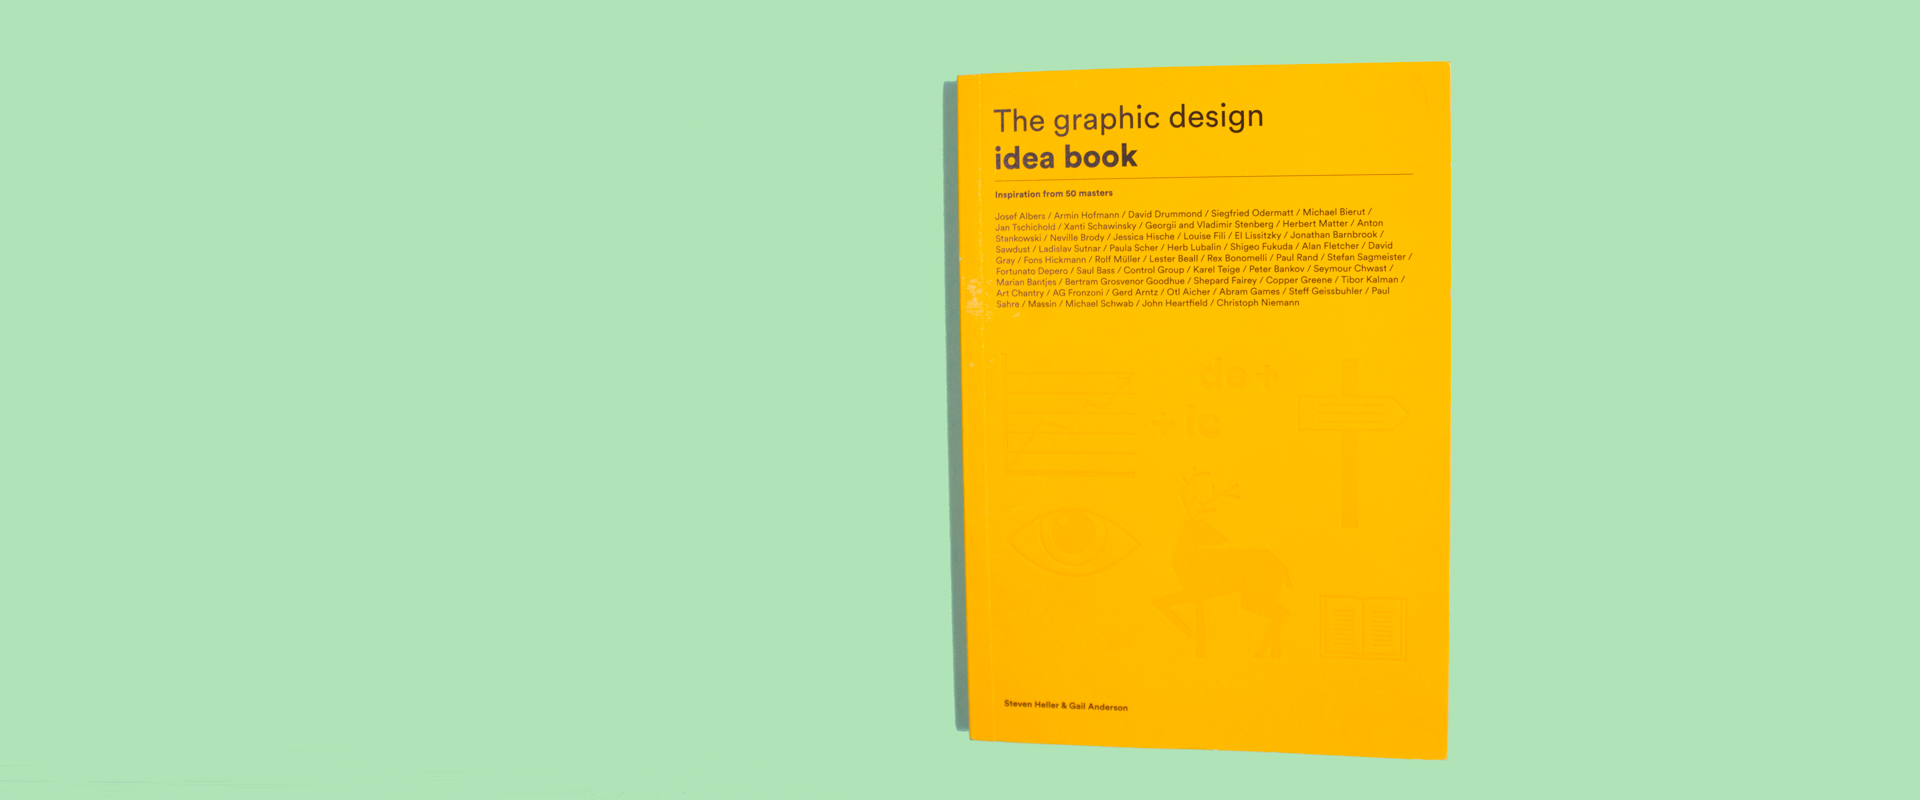 Thumbnail for: Shillington Book Club: The Graphic Design Idea Book by Steven Heller & Gail Anderson